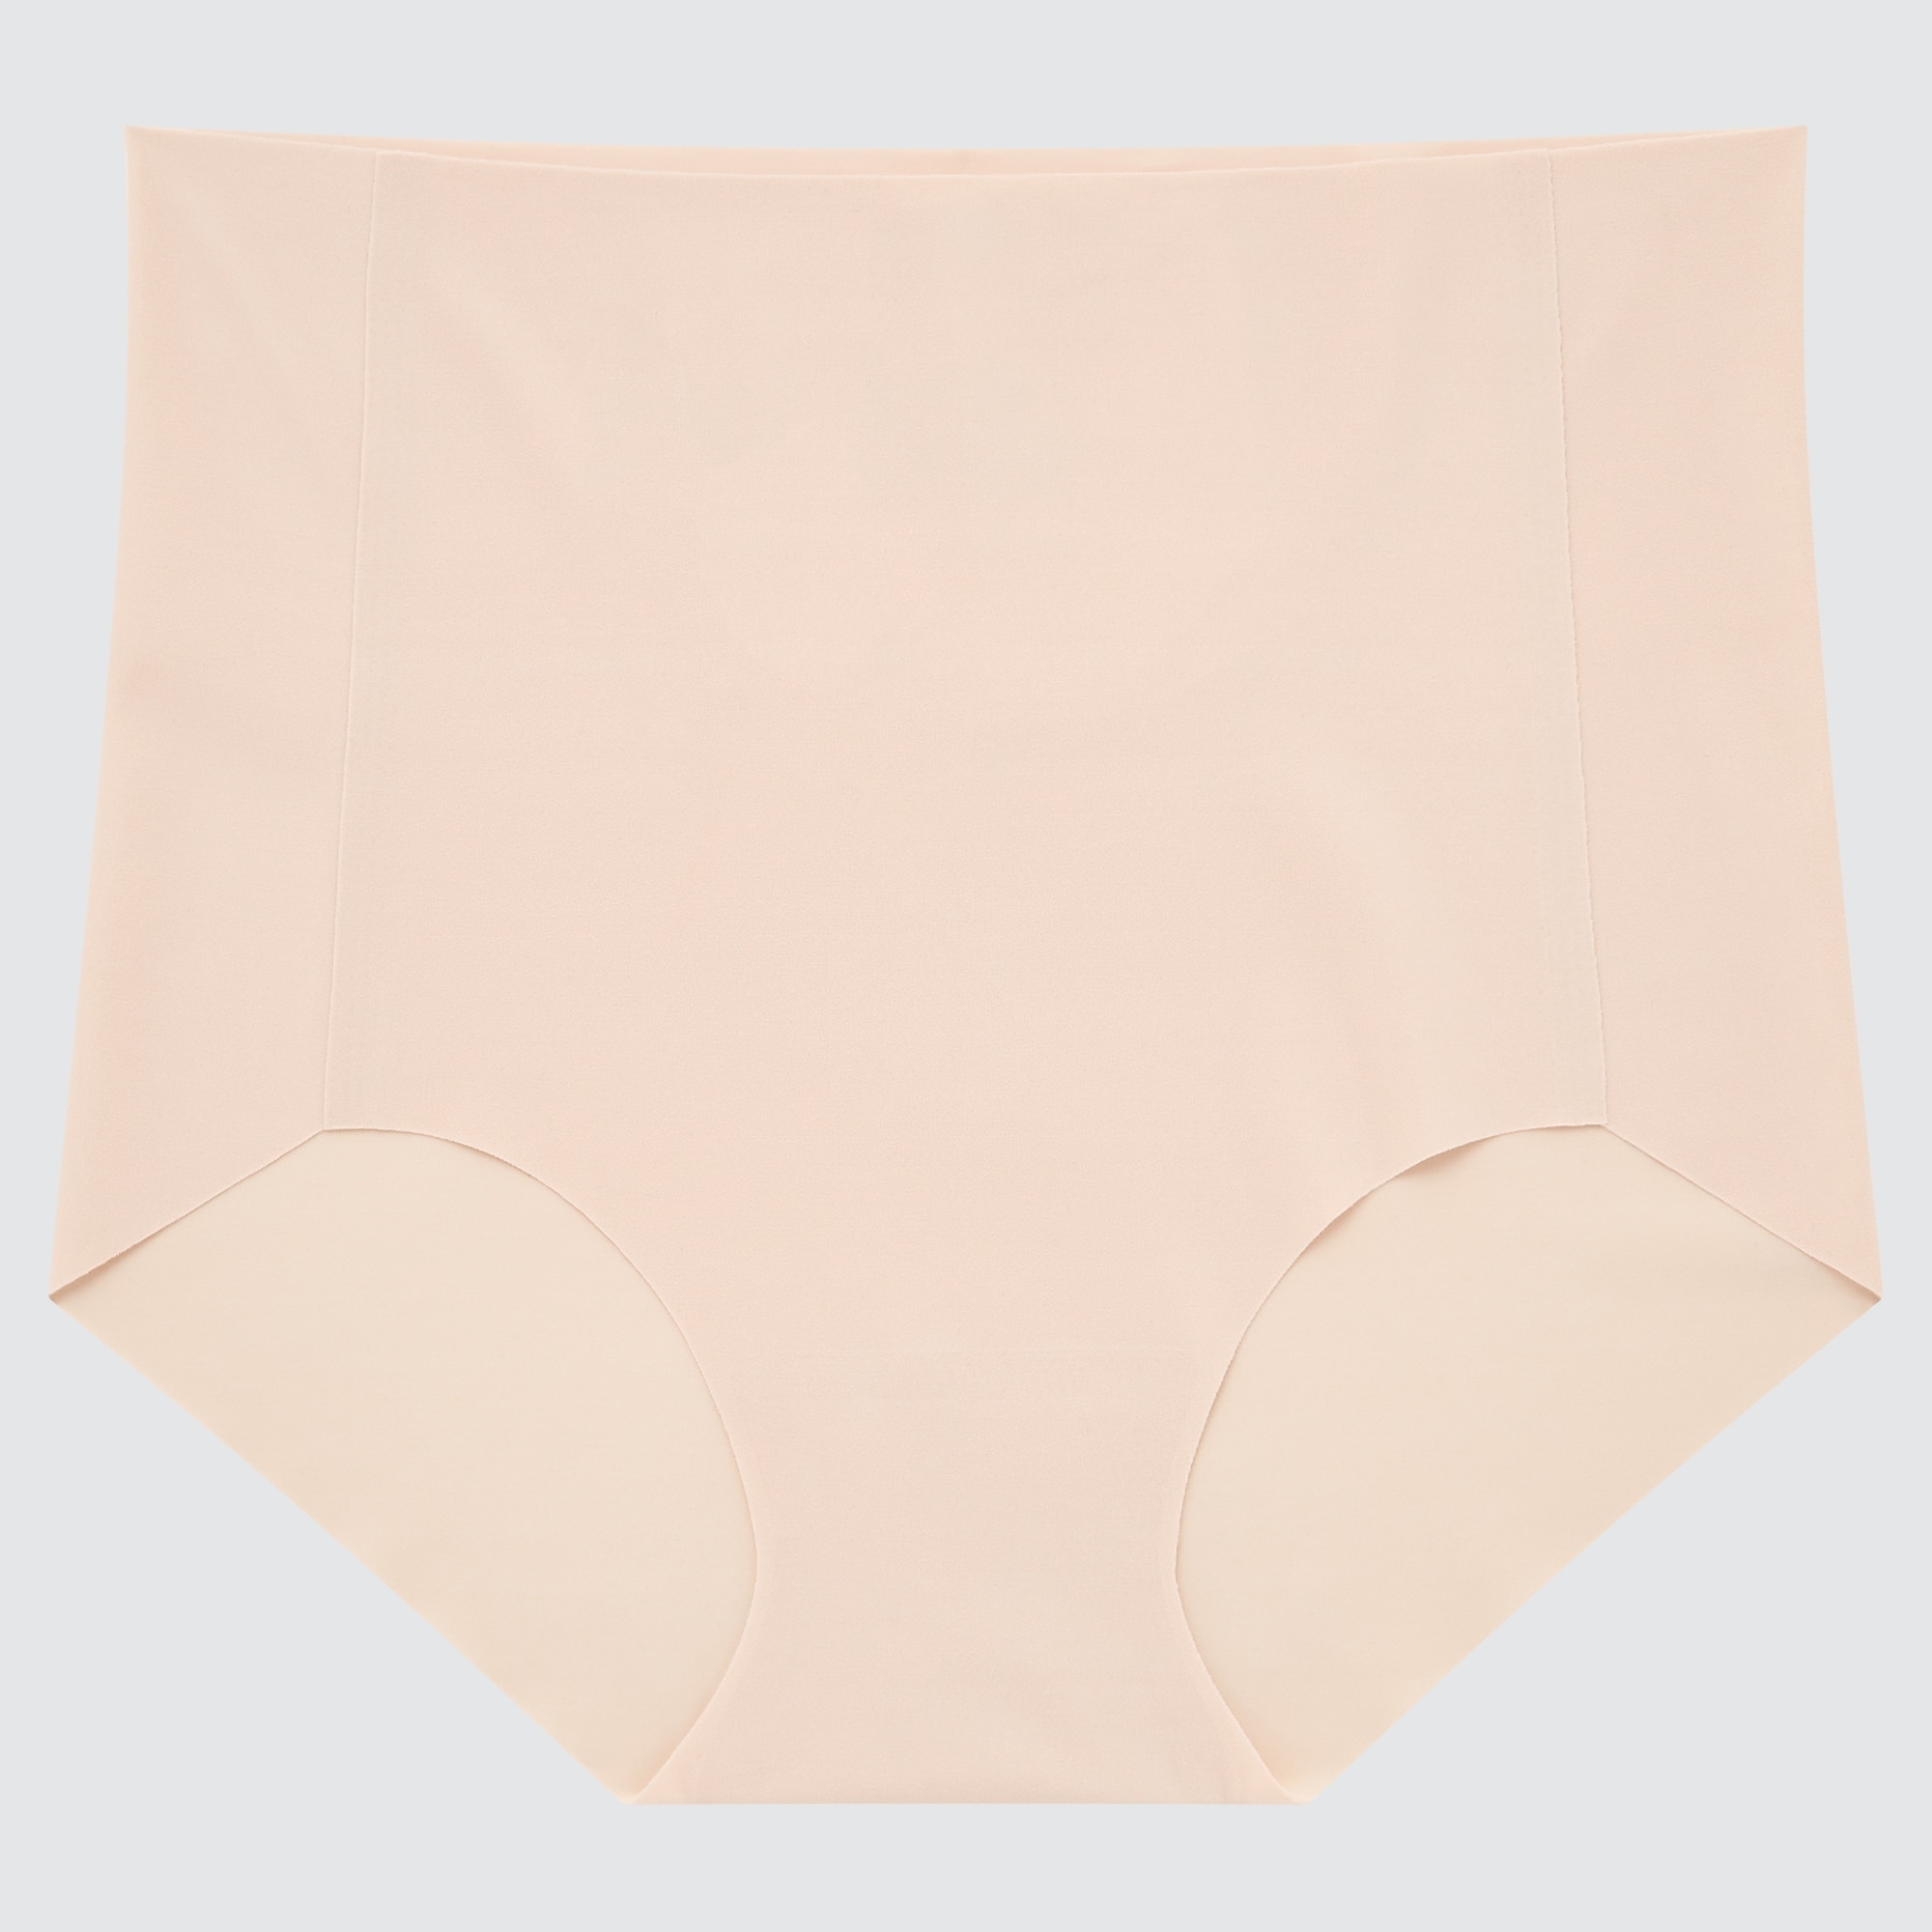 Uniqlo Ultra Seamless Panties/Cd Women